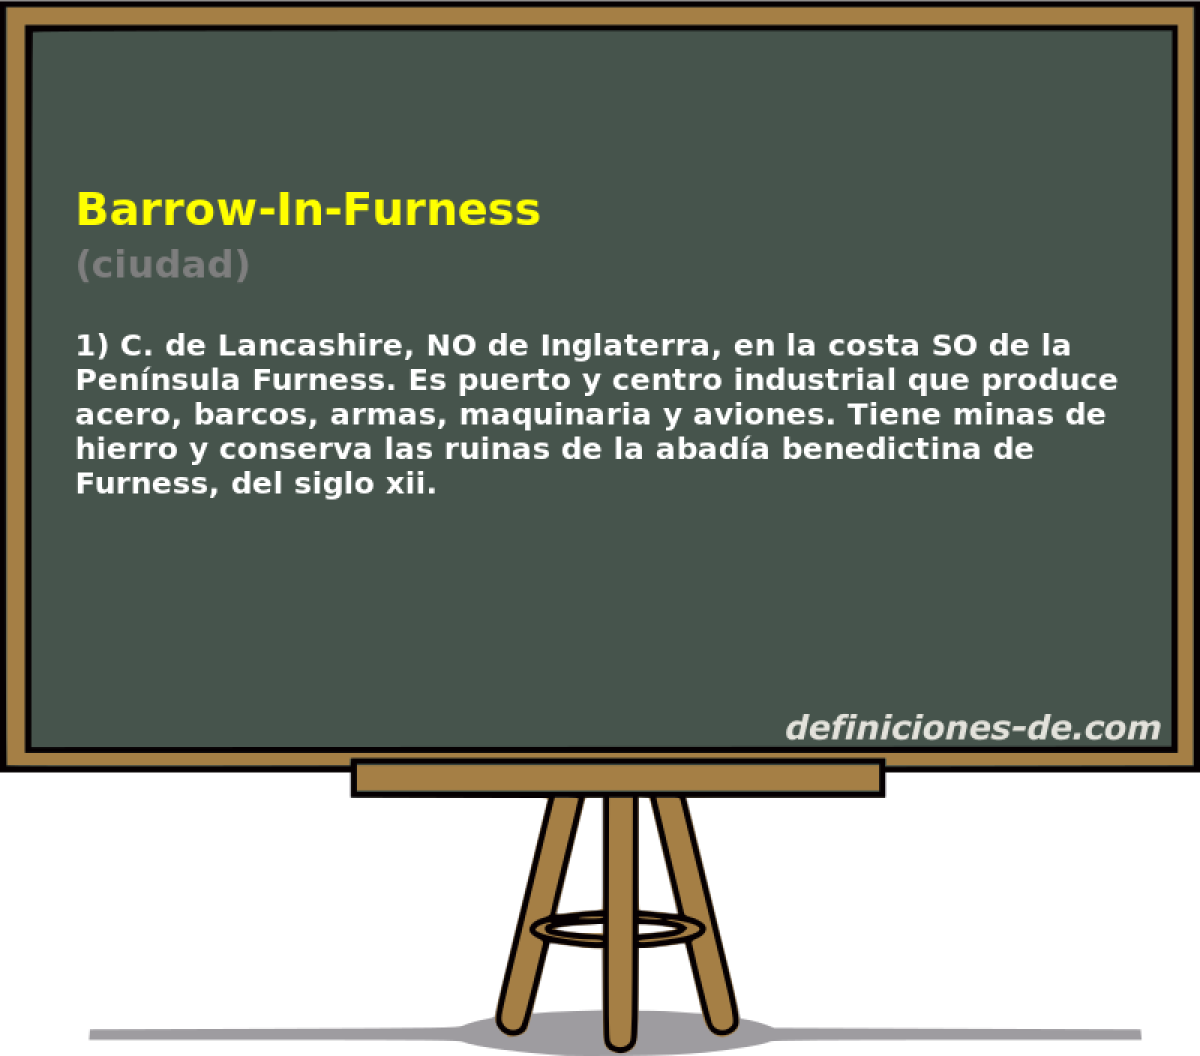 Barrow-In-Furness (ciudad)